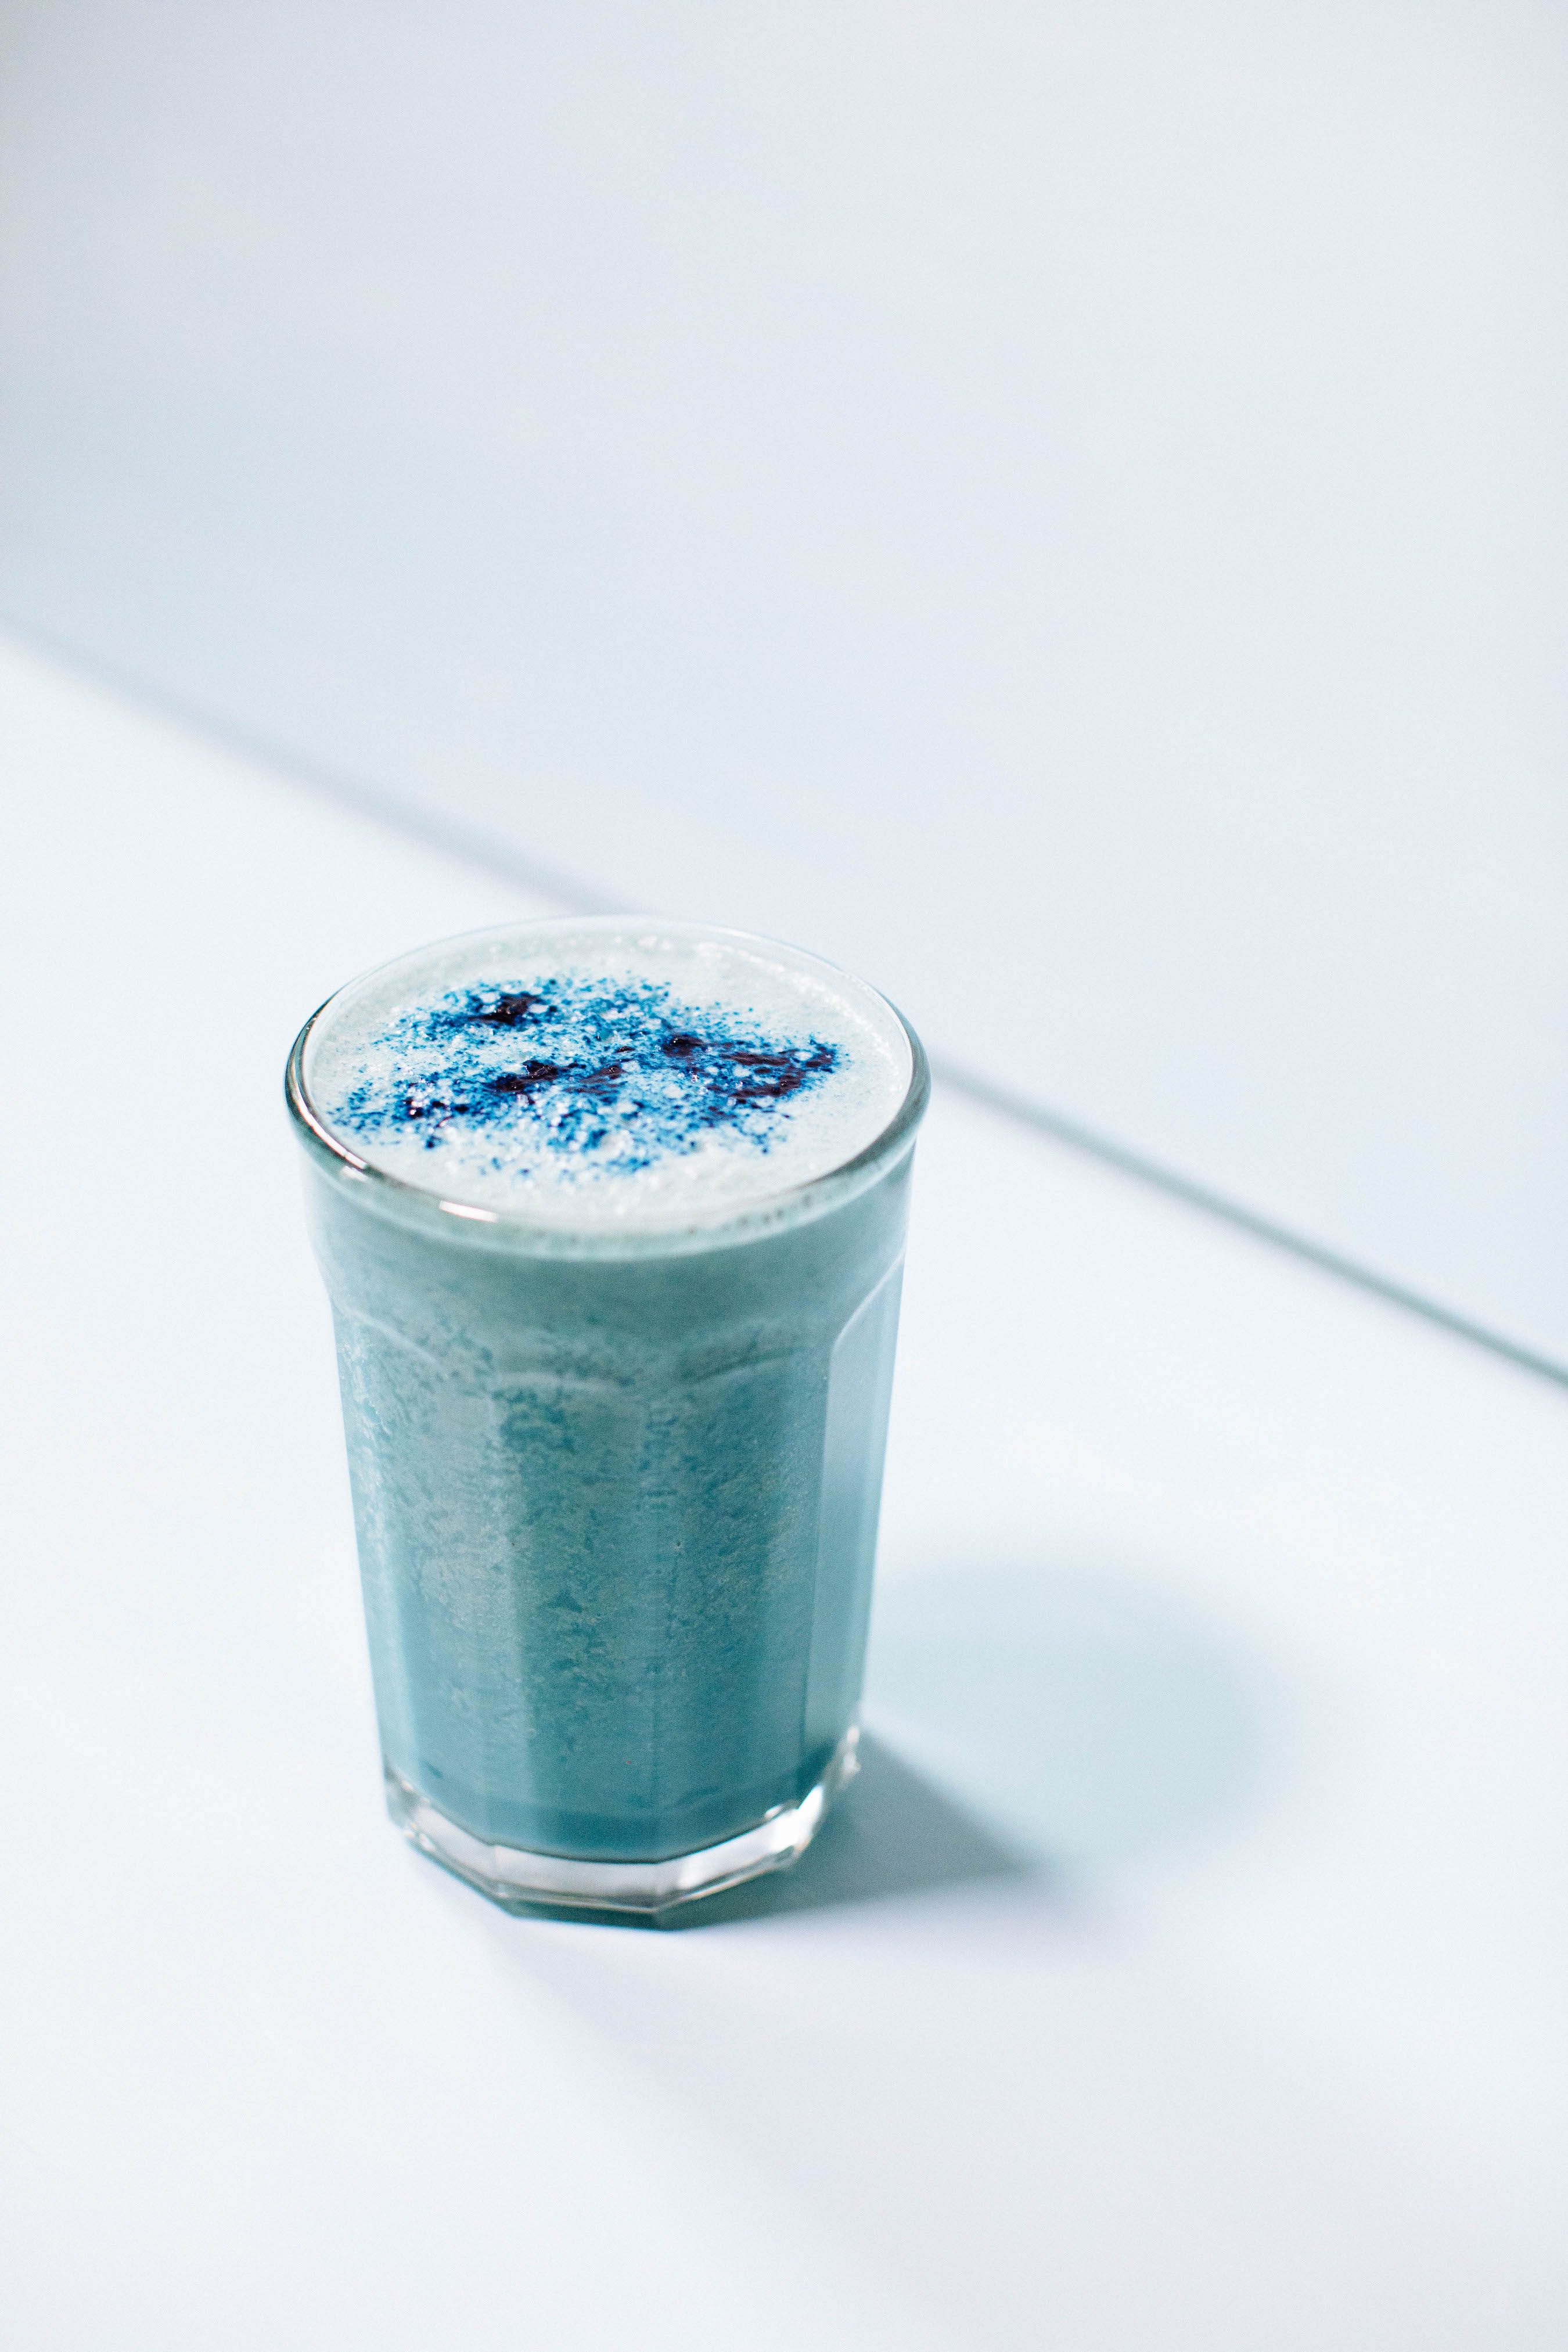 Blue-Spirulina-Milk-Blue-Magic-Majik-milk-plantbased-vegan-nutritionstripped-recipe-2